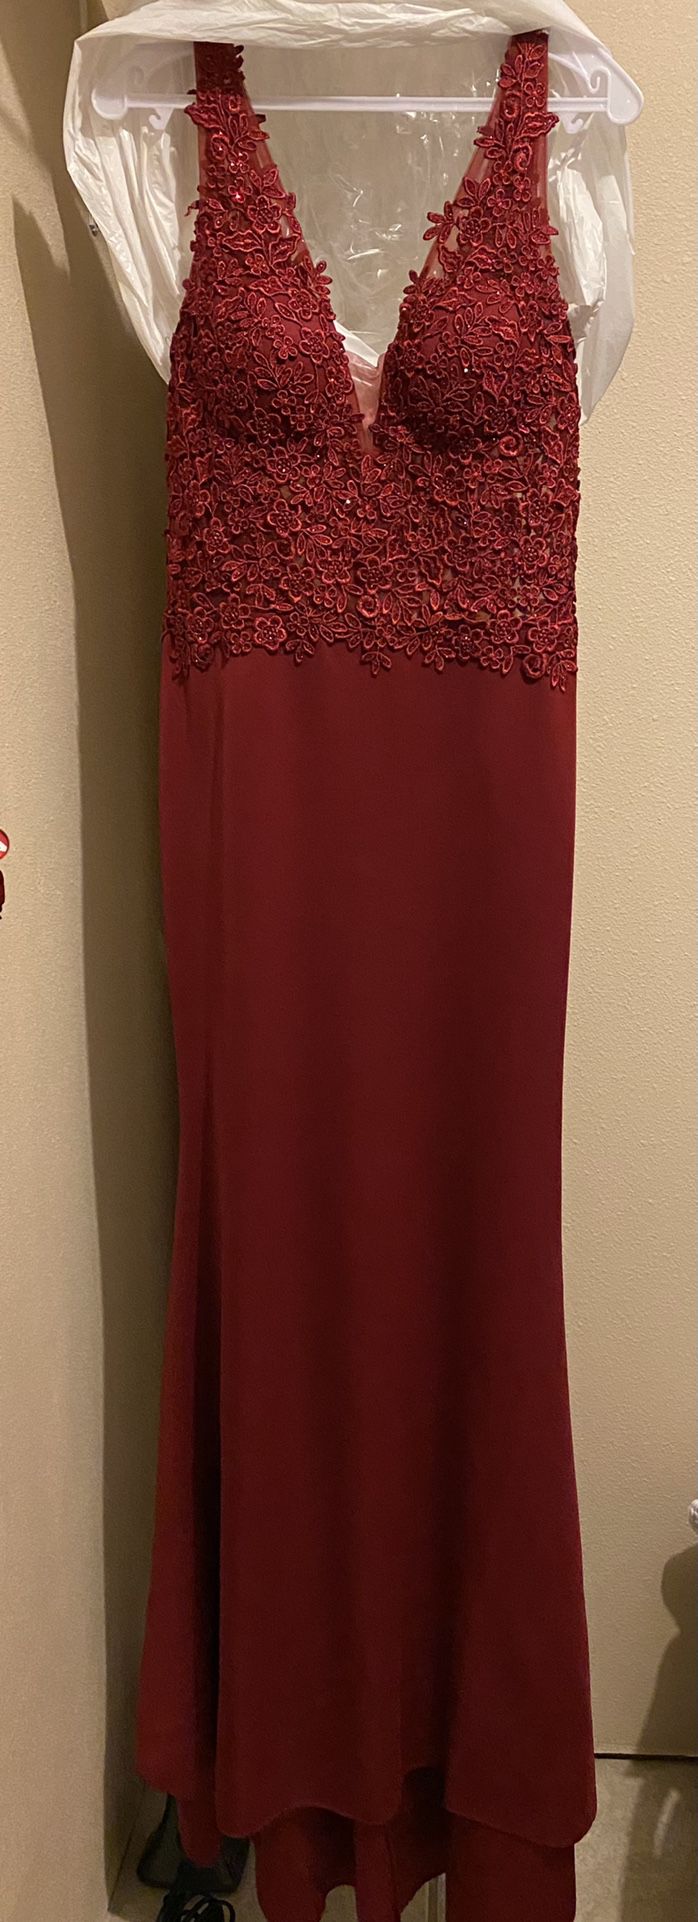 Red Formal Dress, Form Fitting, Medium, Sequins, Gliterry